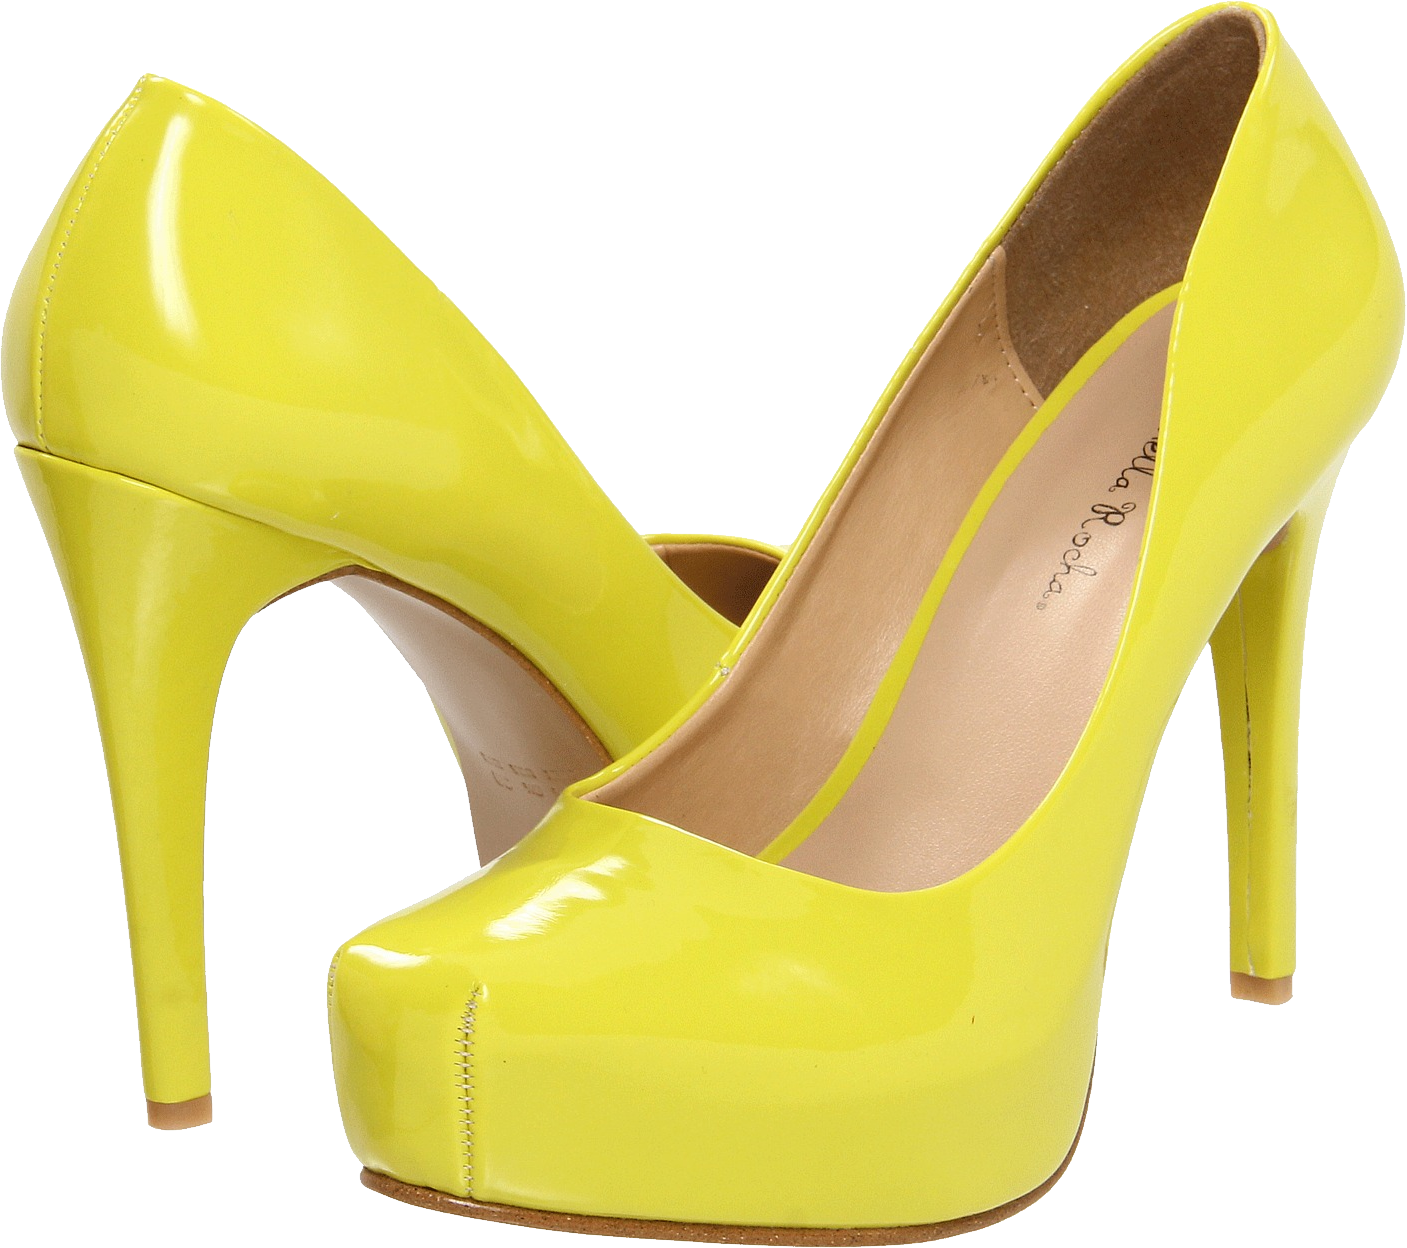 Scarpe da donna gialle